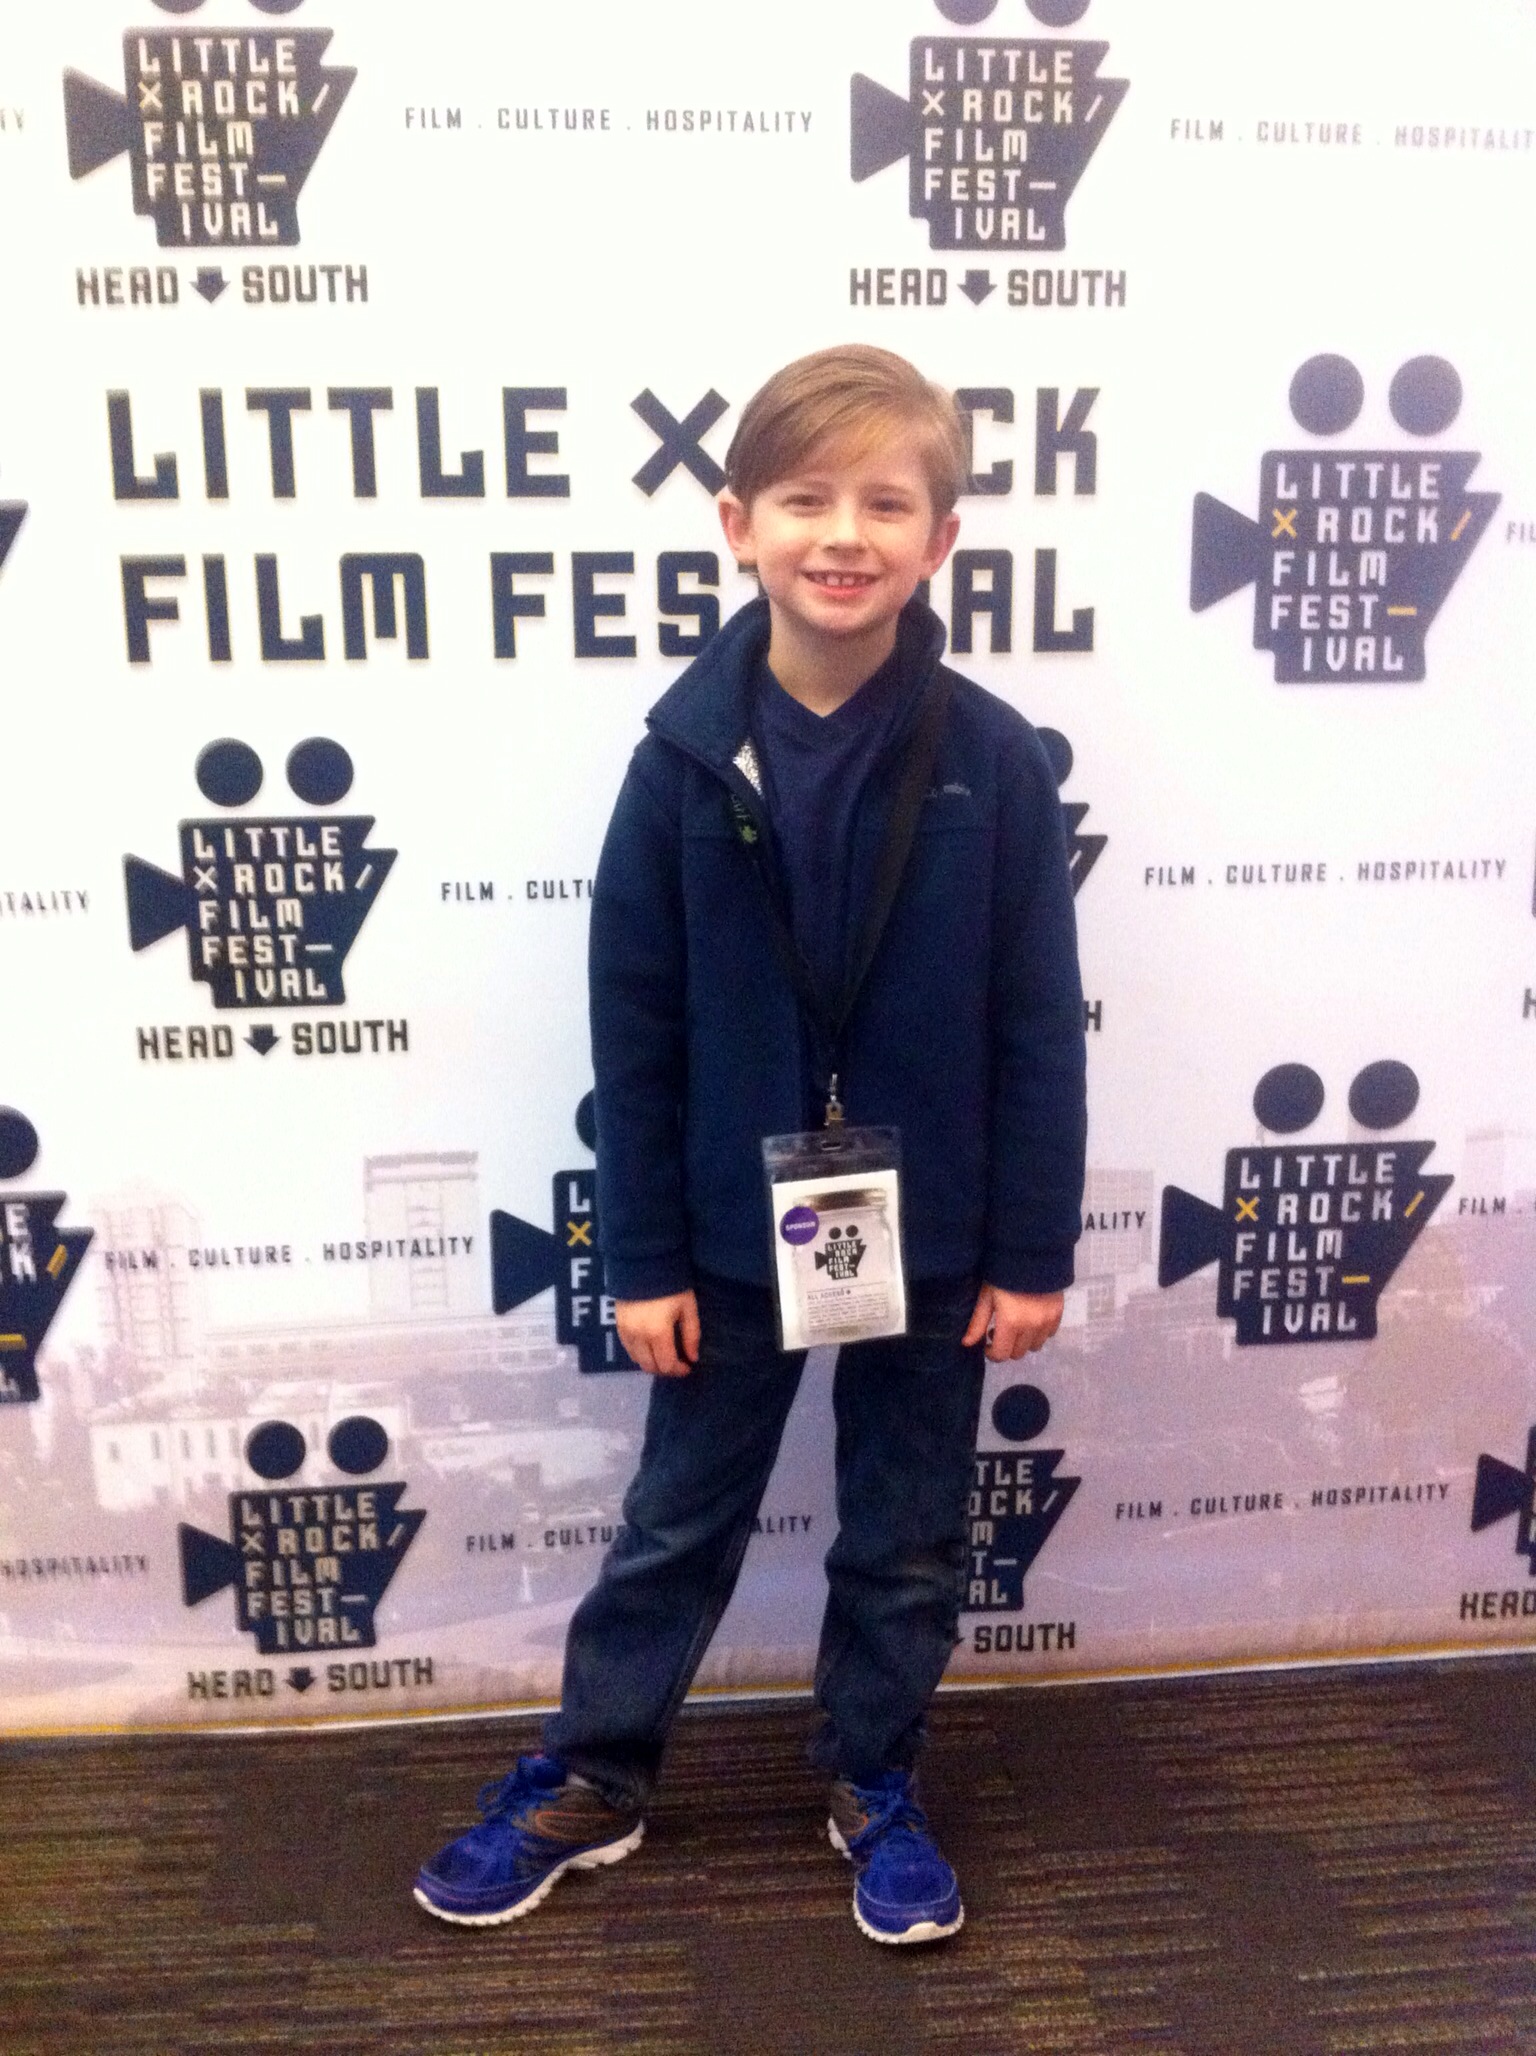 Little Rock Film Festival, 2014